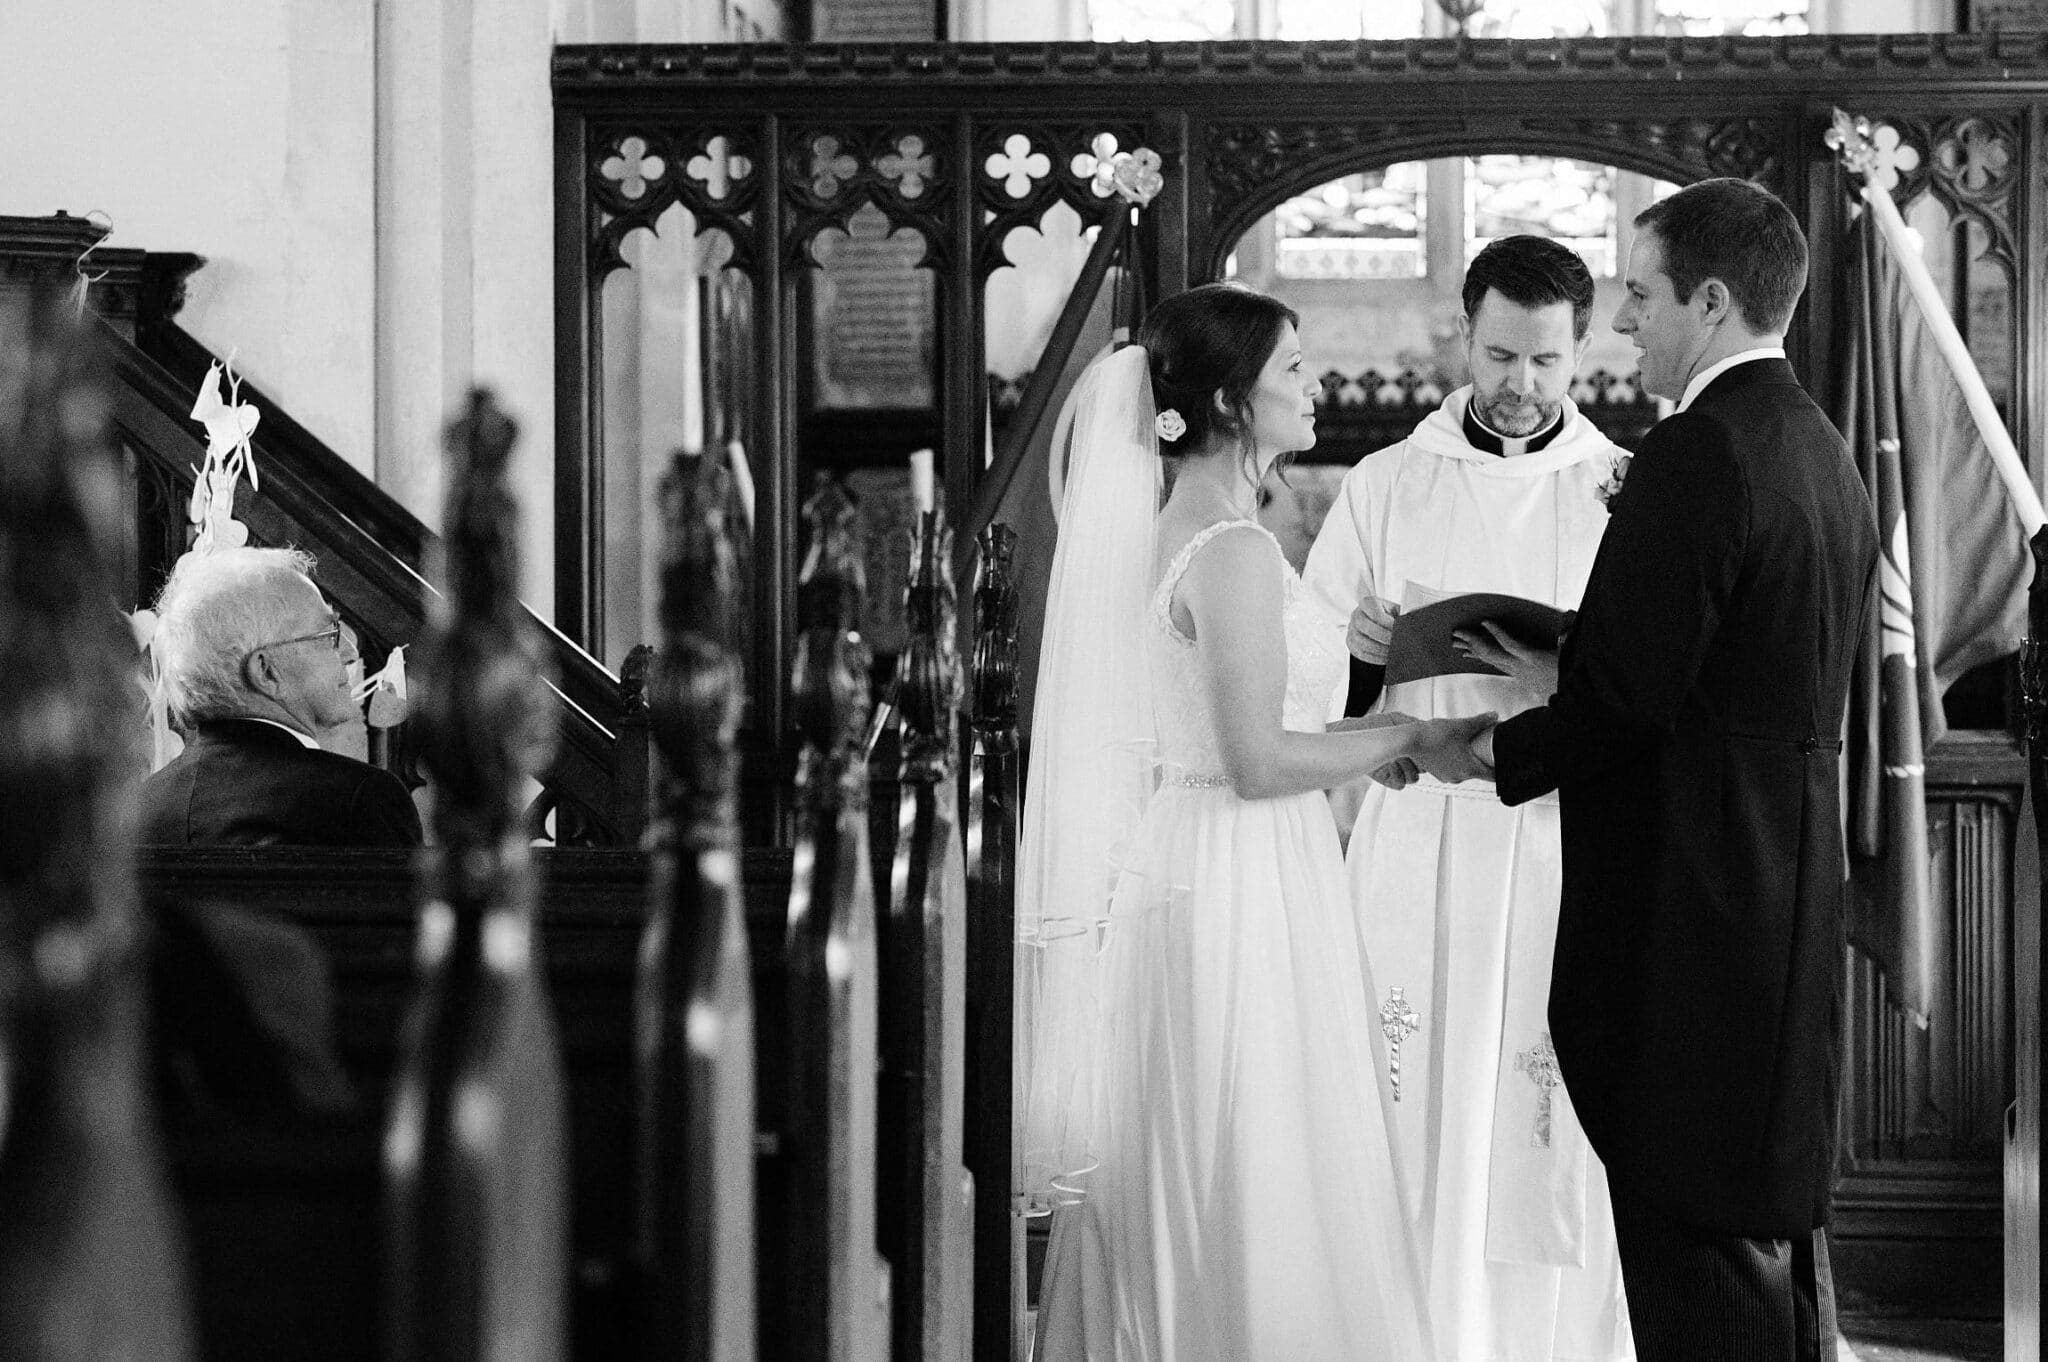 Saying vows at Brownsea Island Church wedding